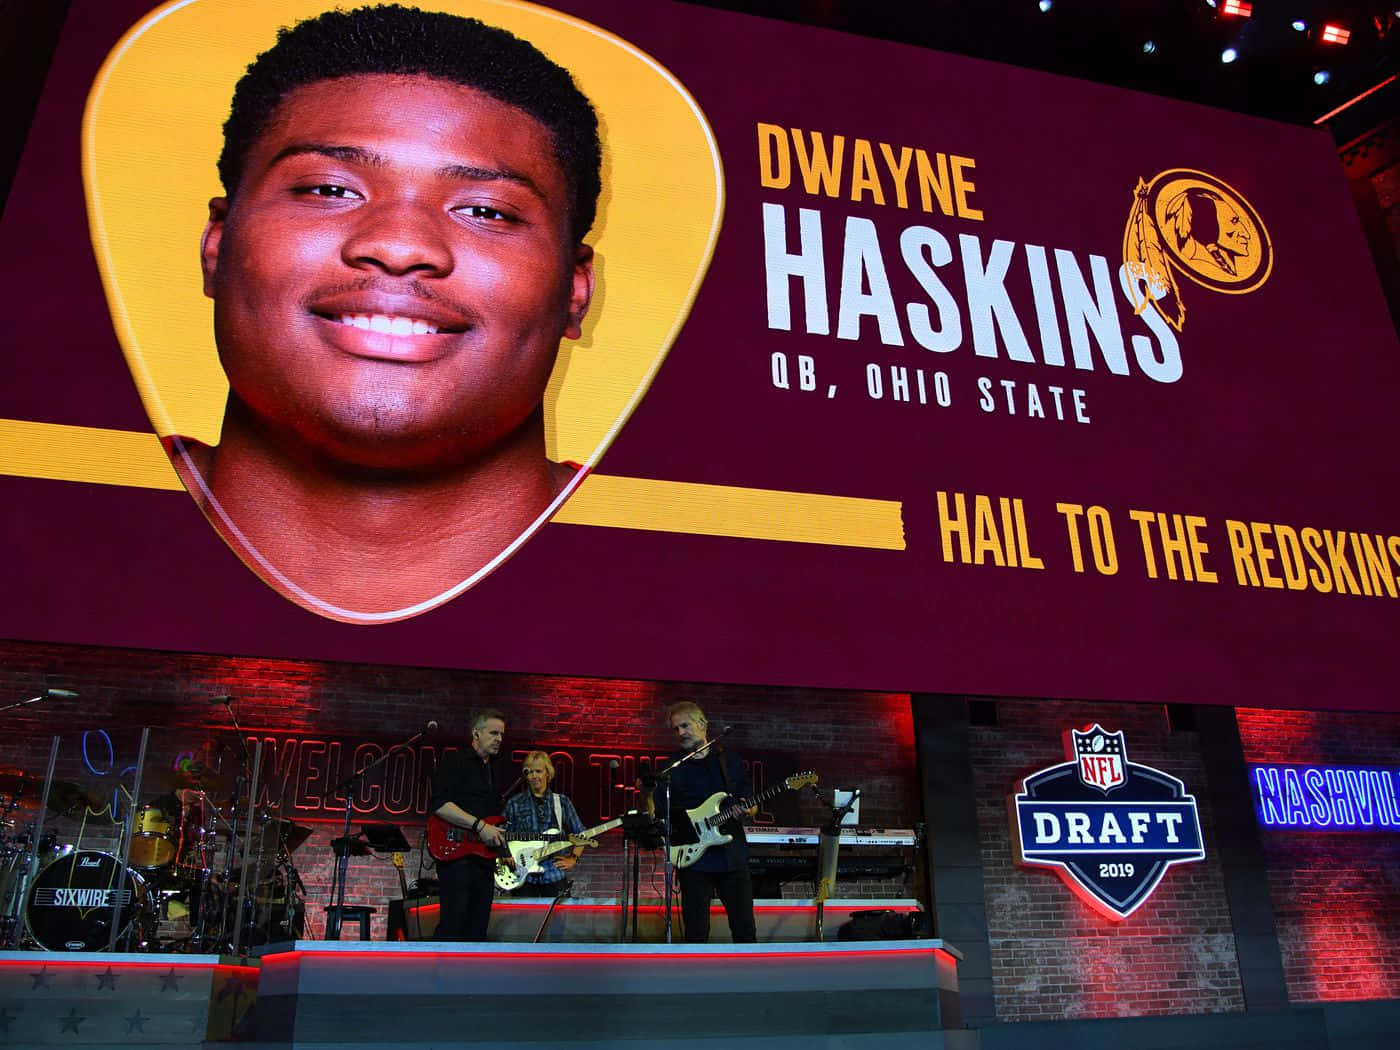 Nfl Quarterback Dwayne Haskins Takes The Field Wallpaper